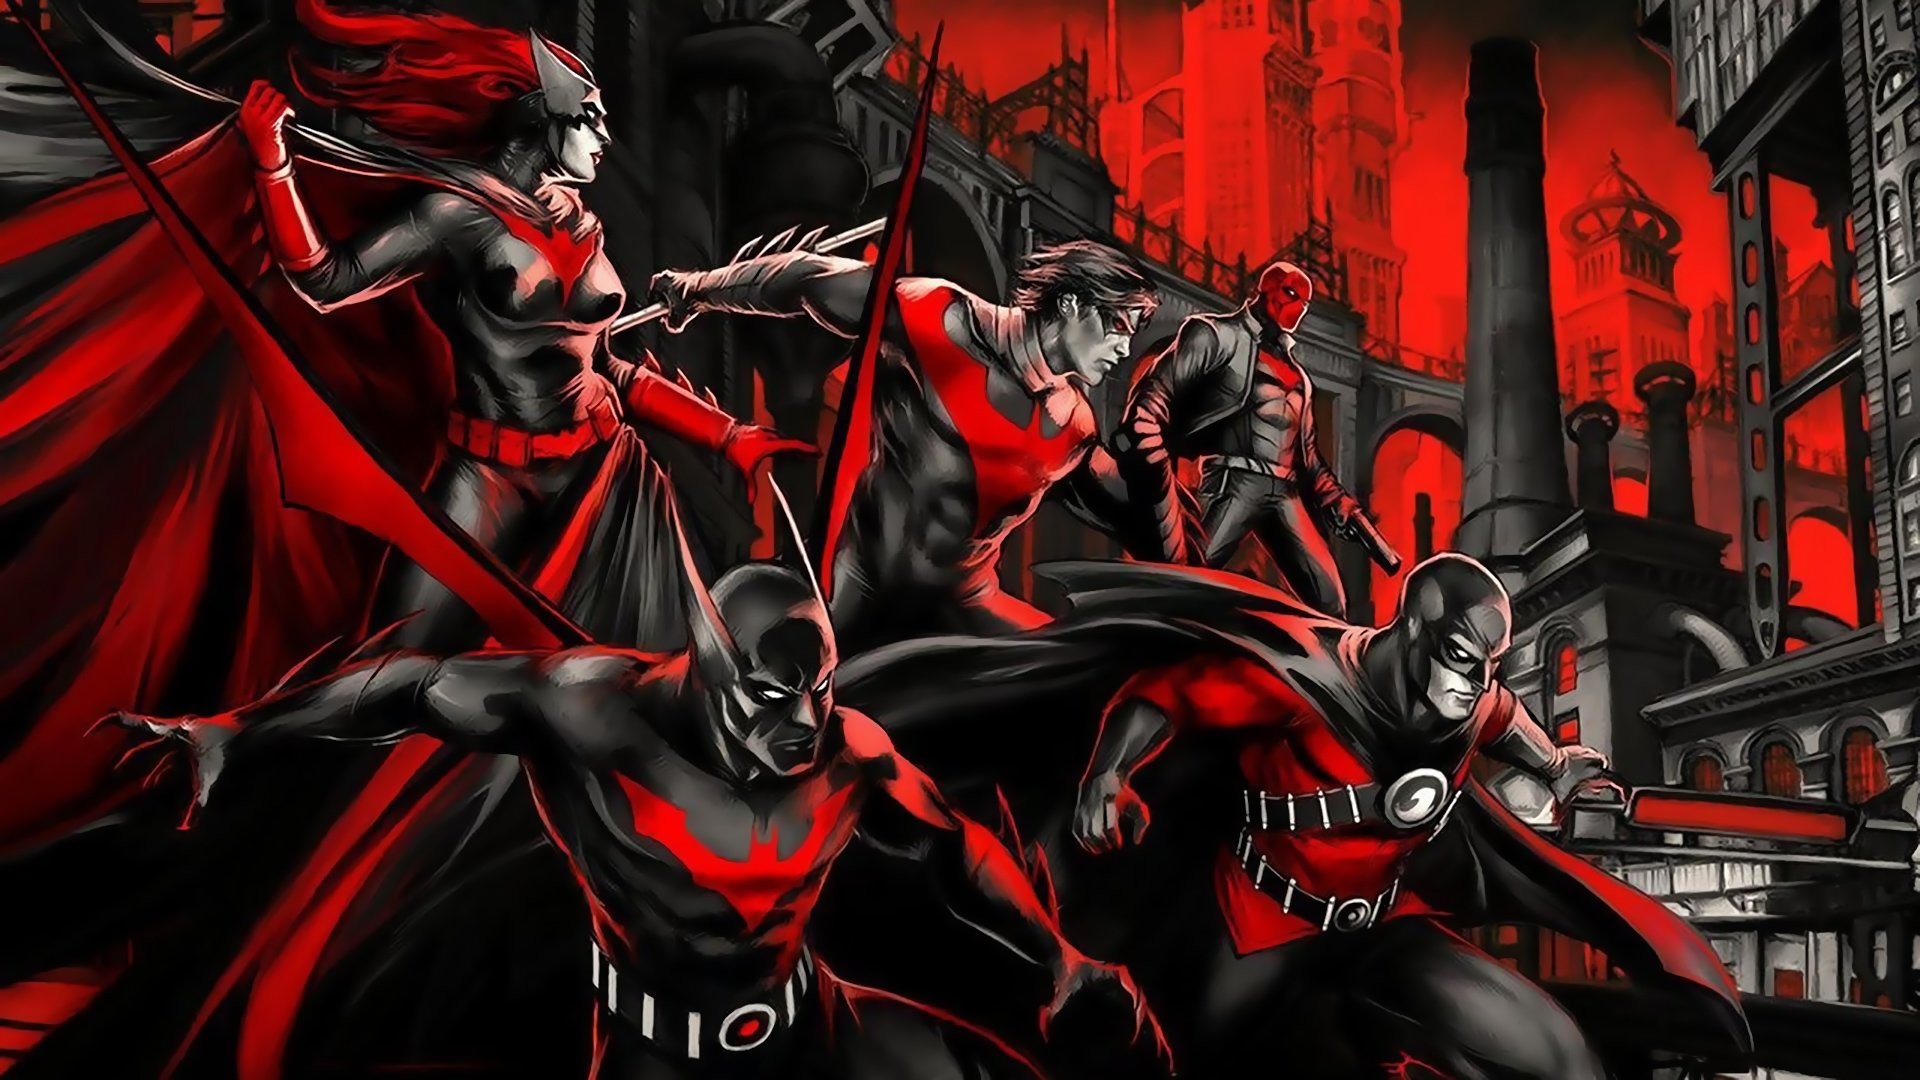 1920x1080 batman beyond batwoman red robin nightwing red hood gotham red dc comics  batman beyond betvumen red